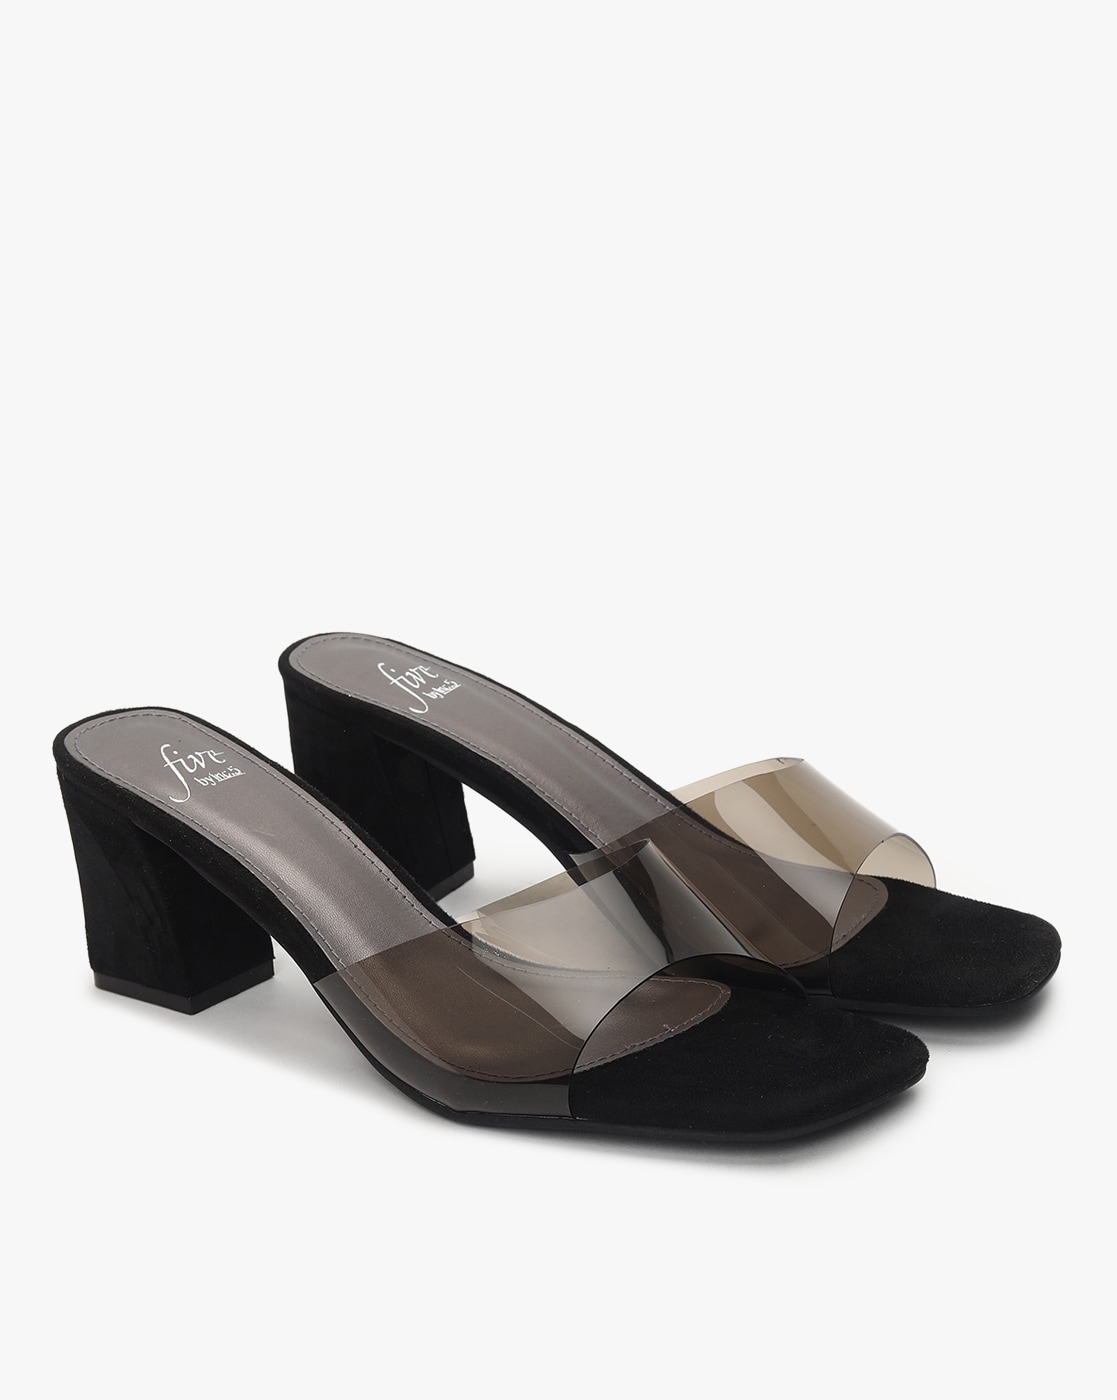 Inc5 Sandals  Buy Inc5 High Heel Fashion Gold Sandals Online  Nykaa  Fashion